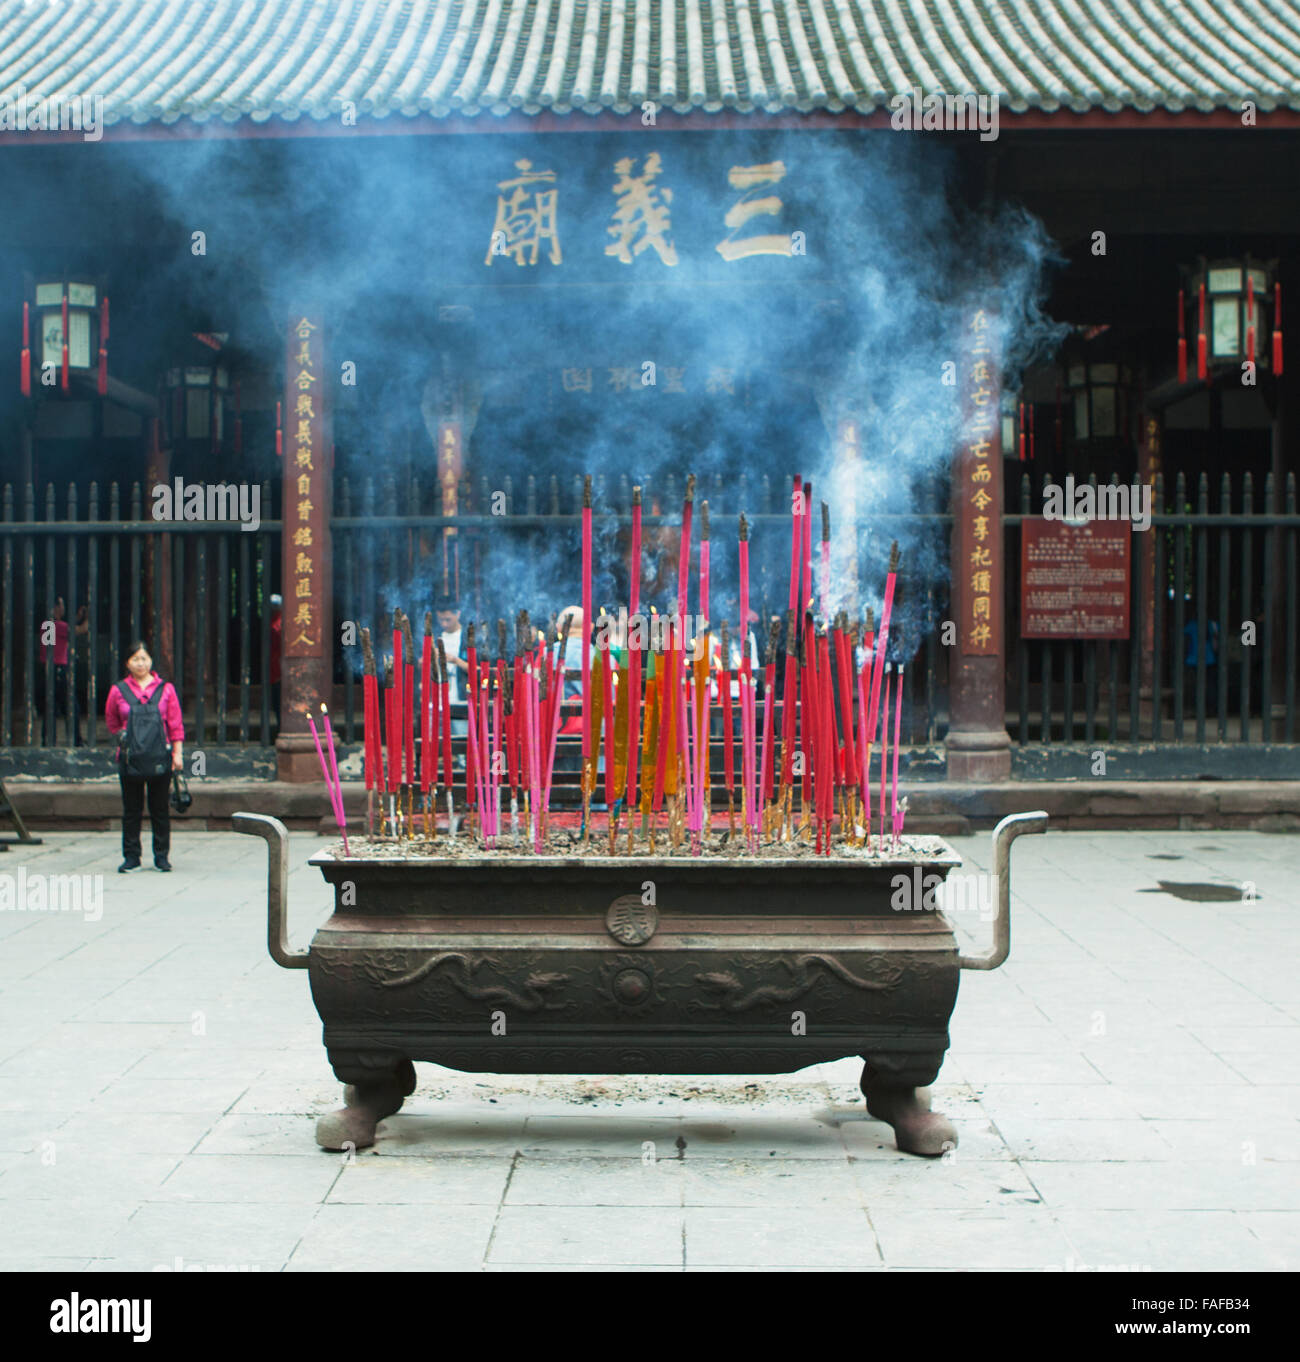 Chinese people burning incense sticks. China Stock Photo